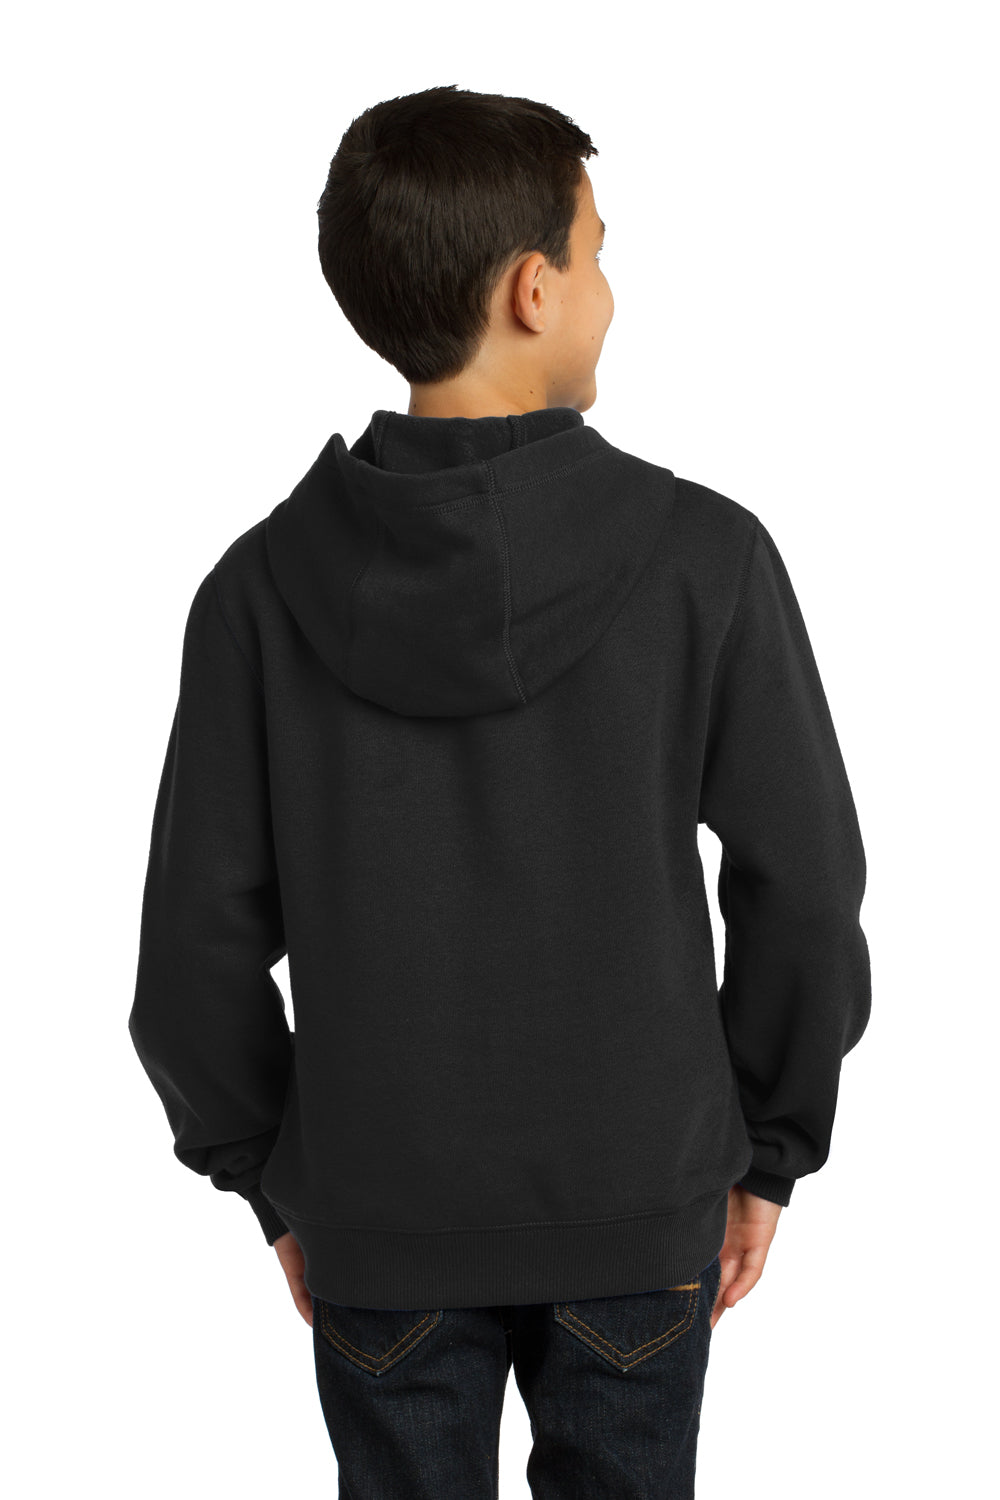 Sport-Tek YST254 Youth Fleece Hooded Sweatshirt Hoodie Black Back